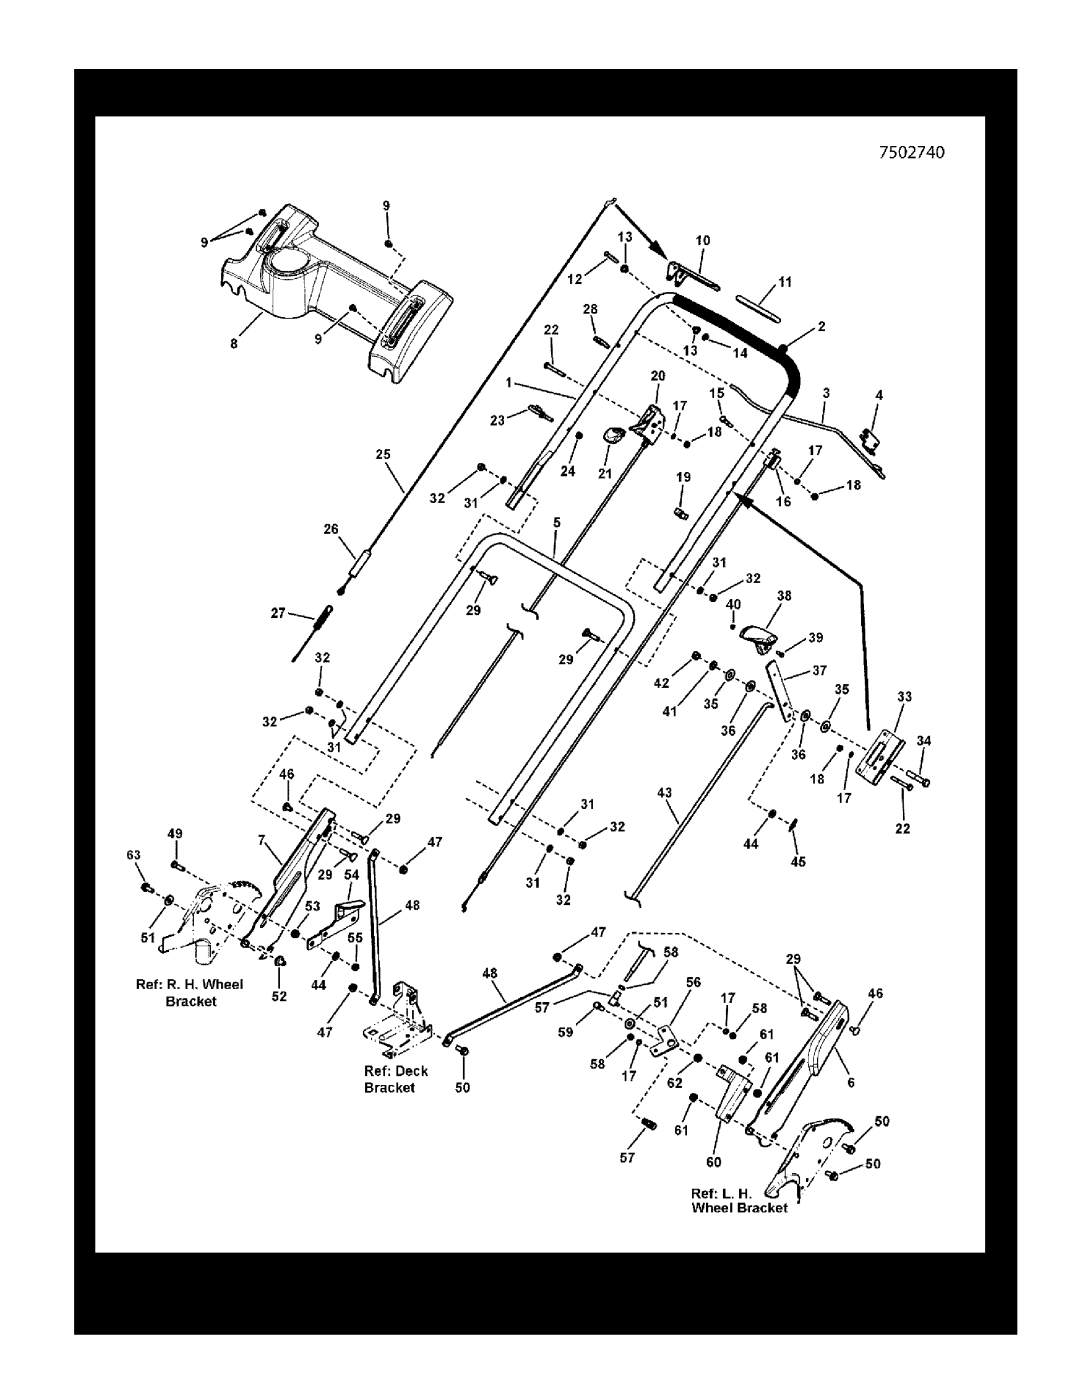 Briggs & Stratton 7800849 manual Handle Group, Reproduction, Manual No, 7106167, Steel Deck Walk Behind, Series 